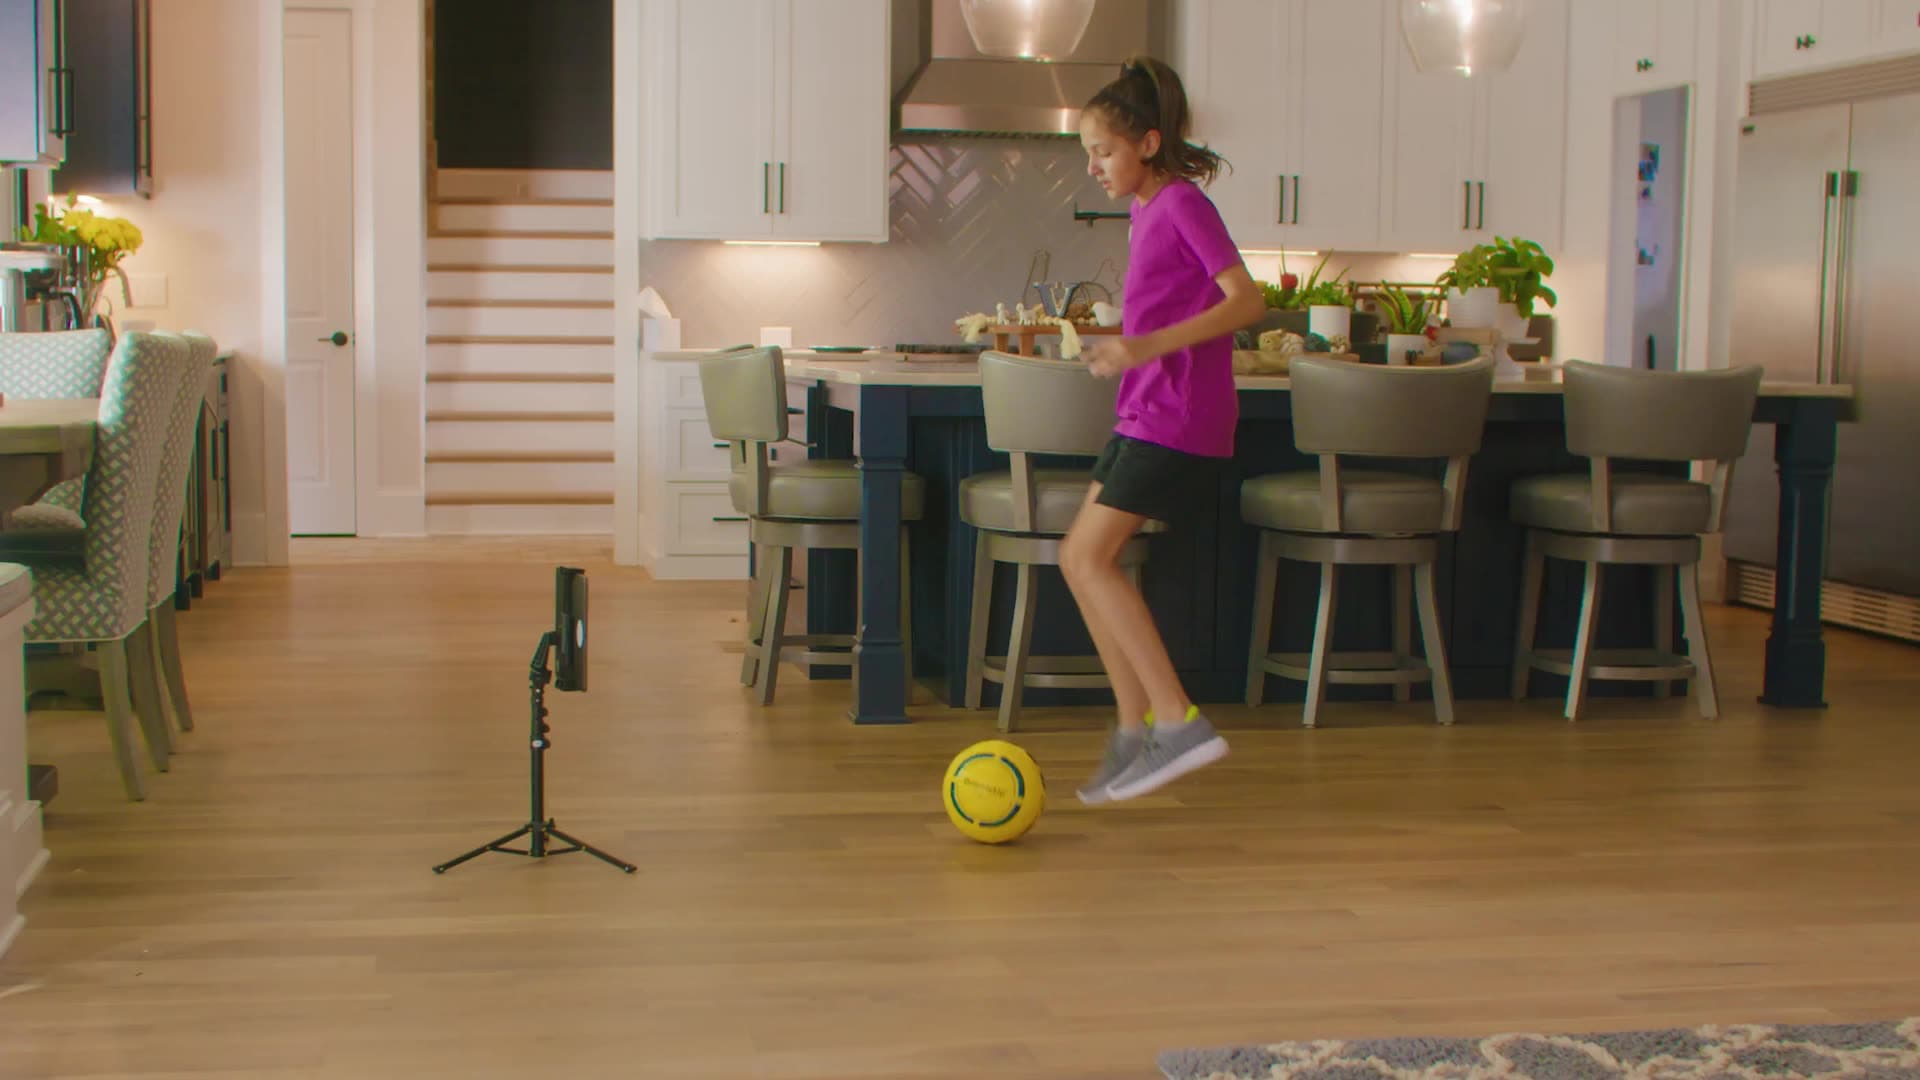 Smart Soccer Ball Live Action Video Thumbnail